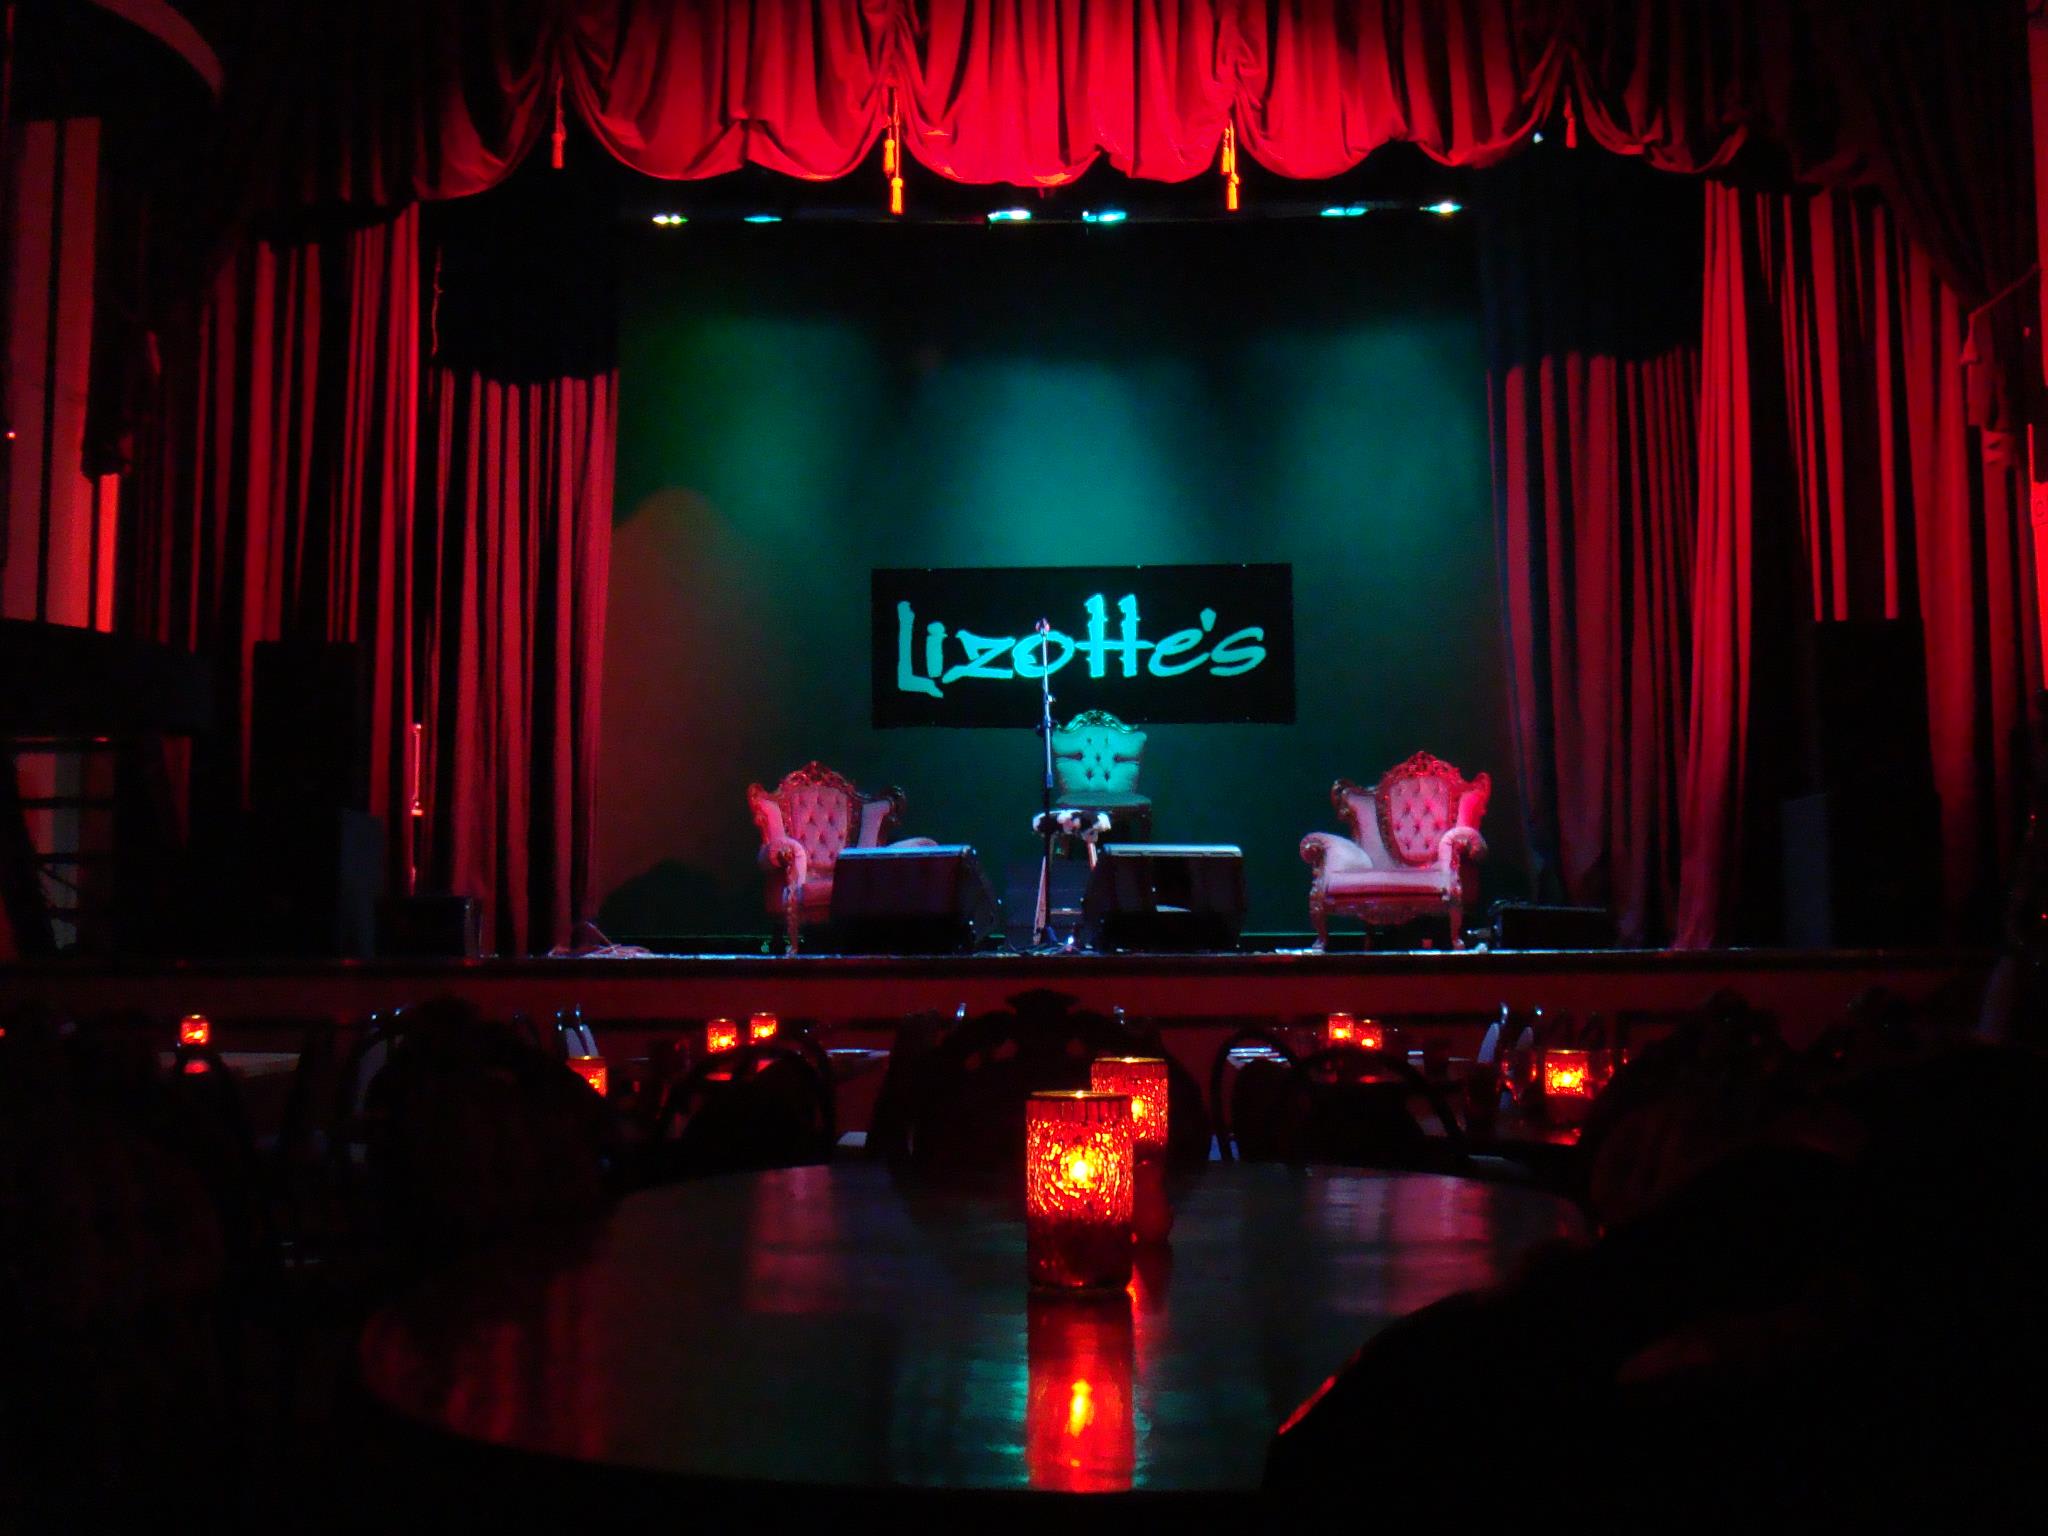 Lizotte's Theatre Restaurant